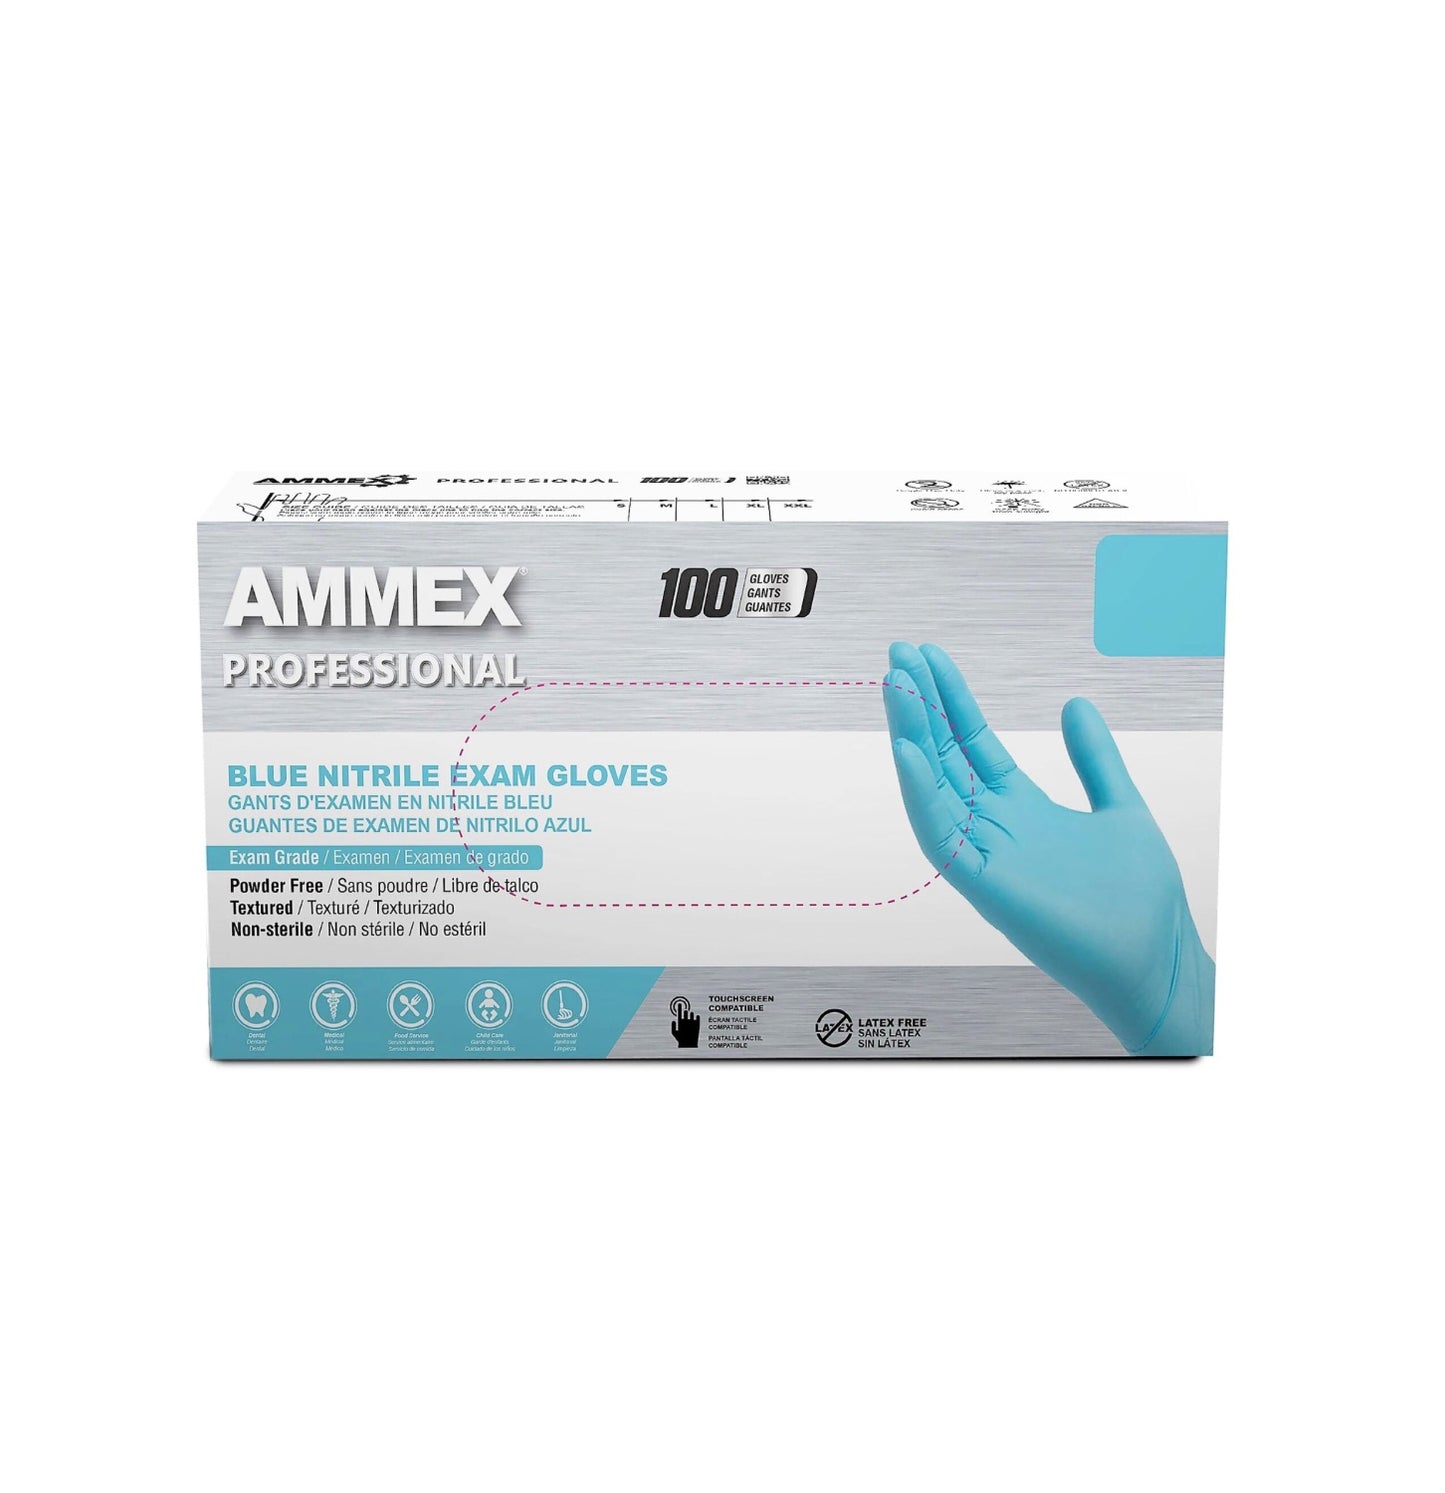 Box of AMMEX Professional APFN powder free nitrile gloves, in blue